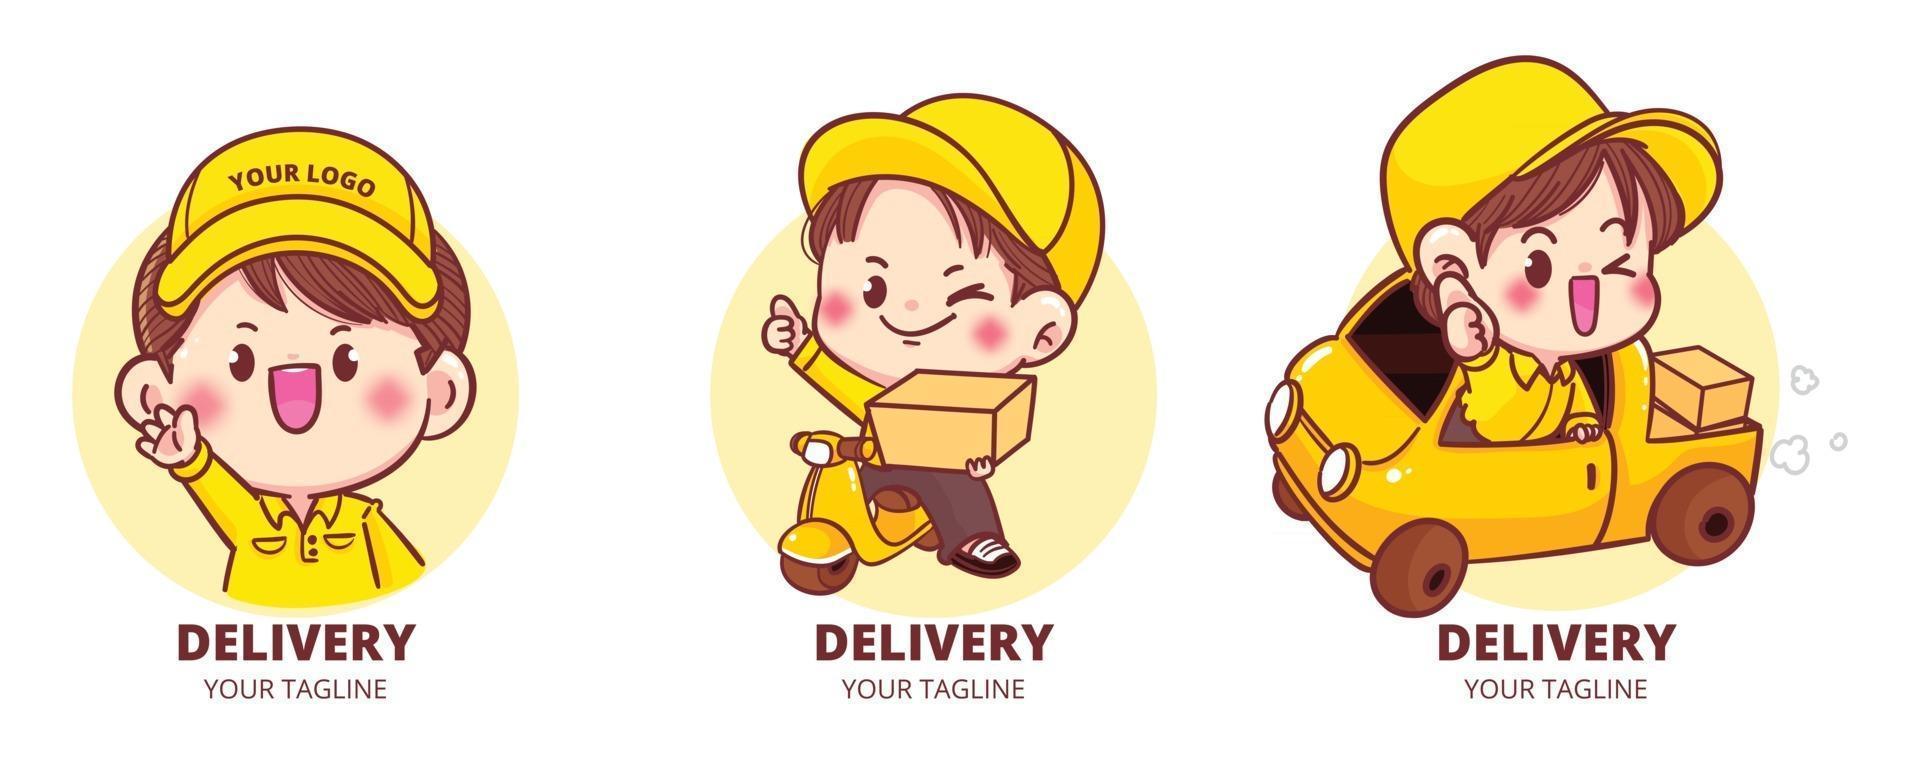 Set of Cute Delivery logo cartoon art illustration vector